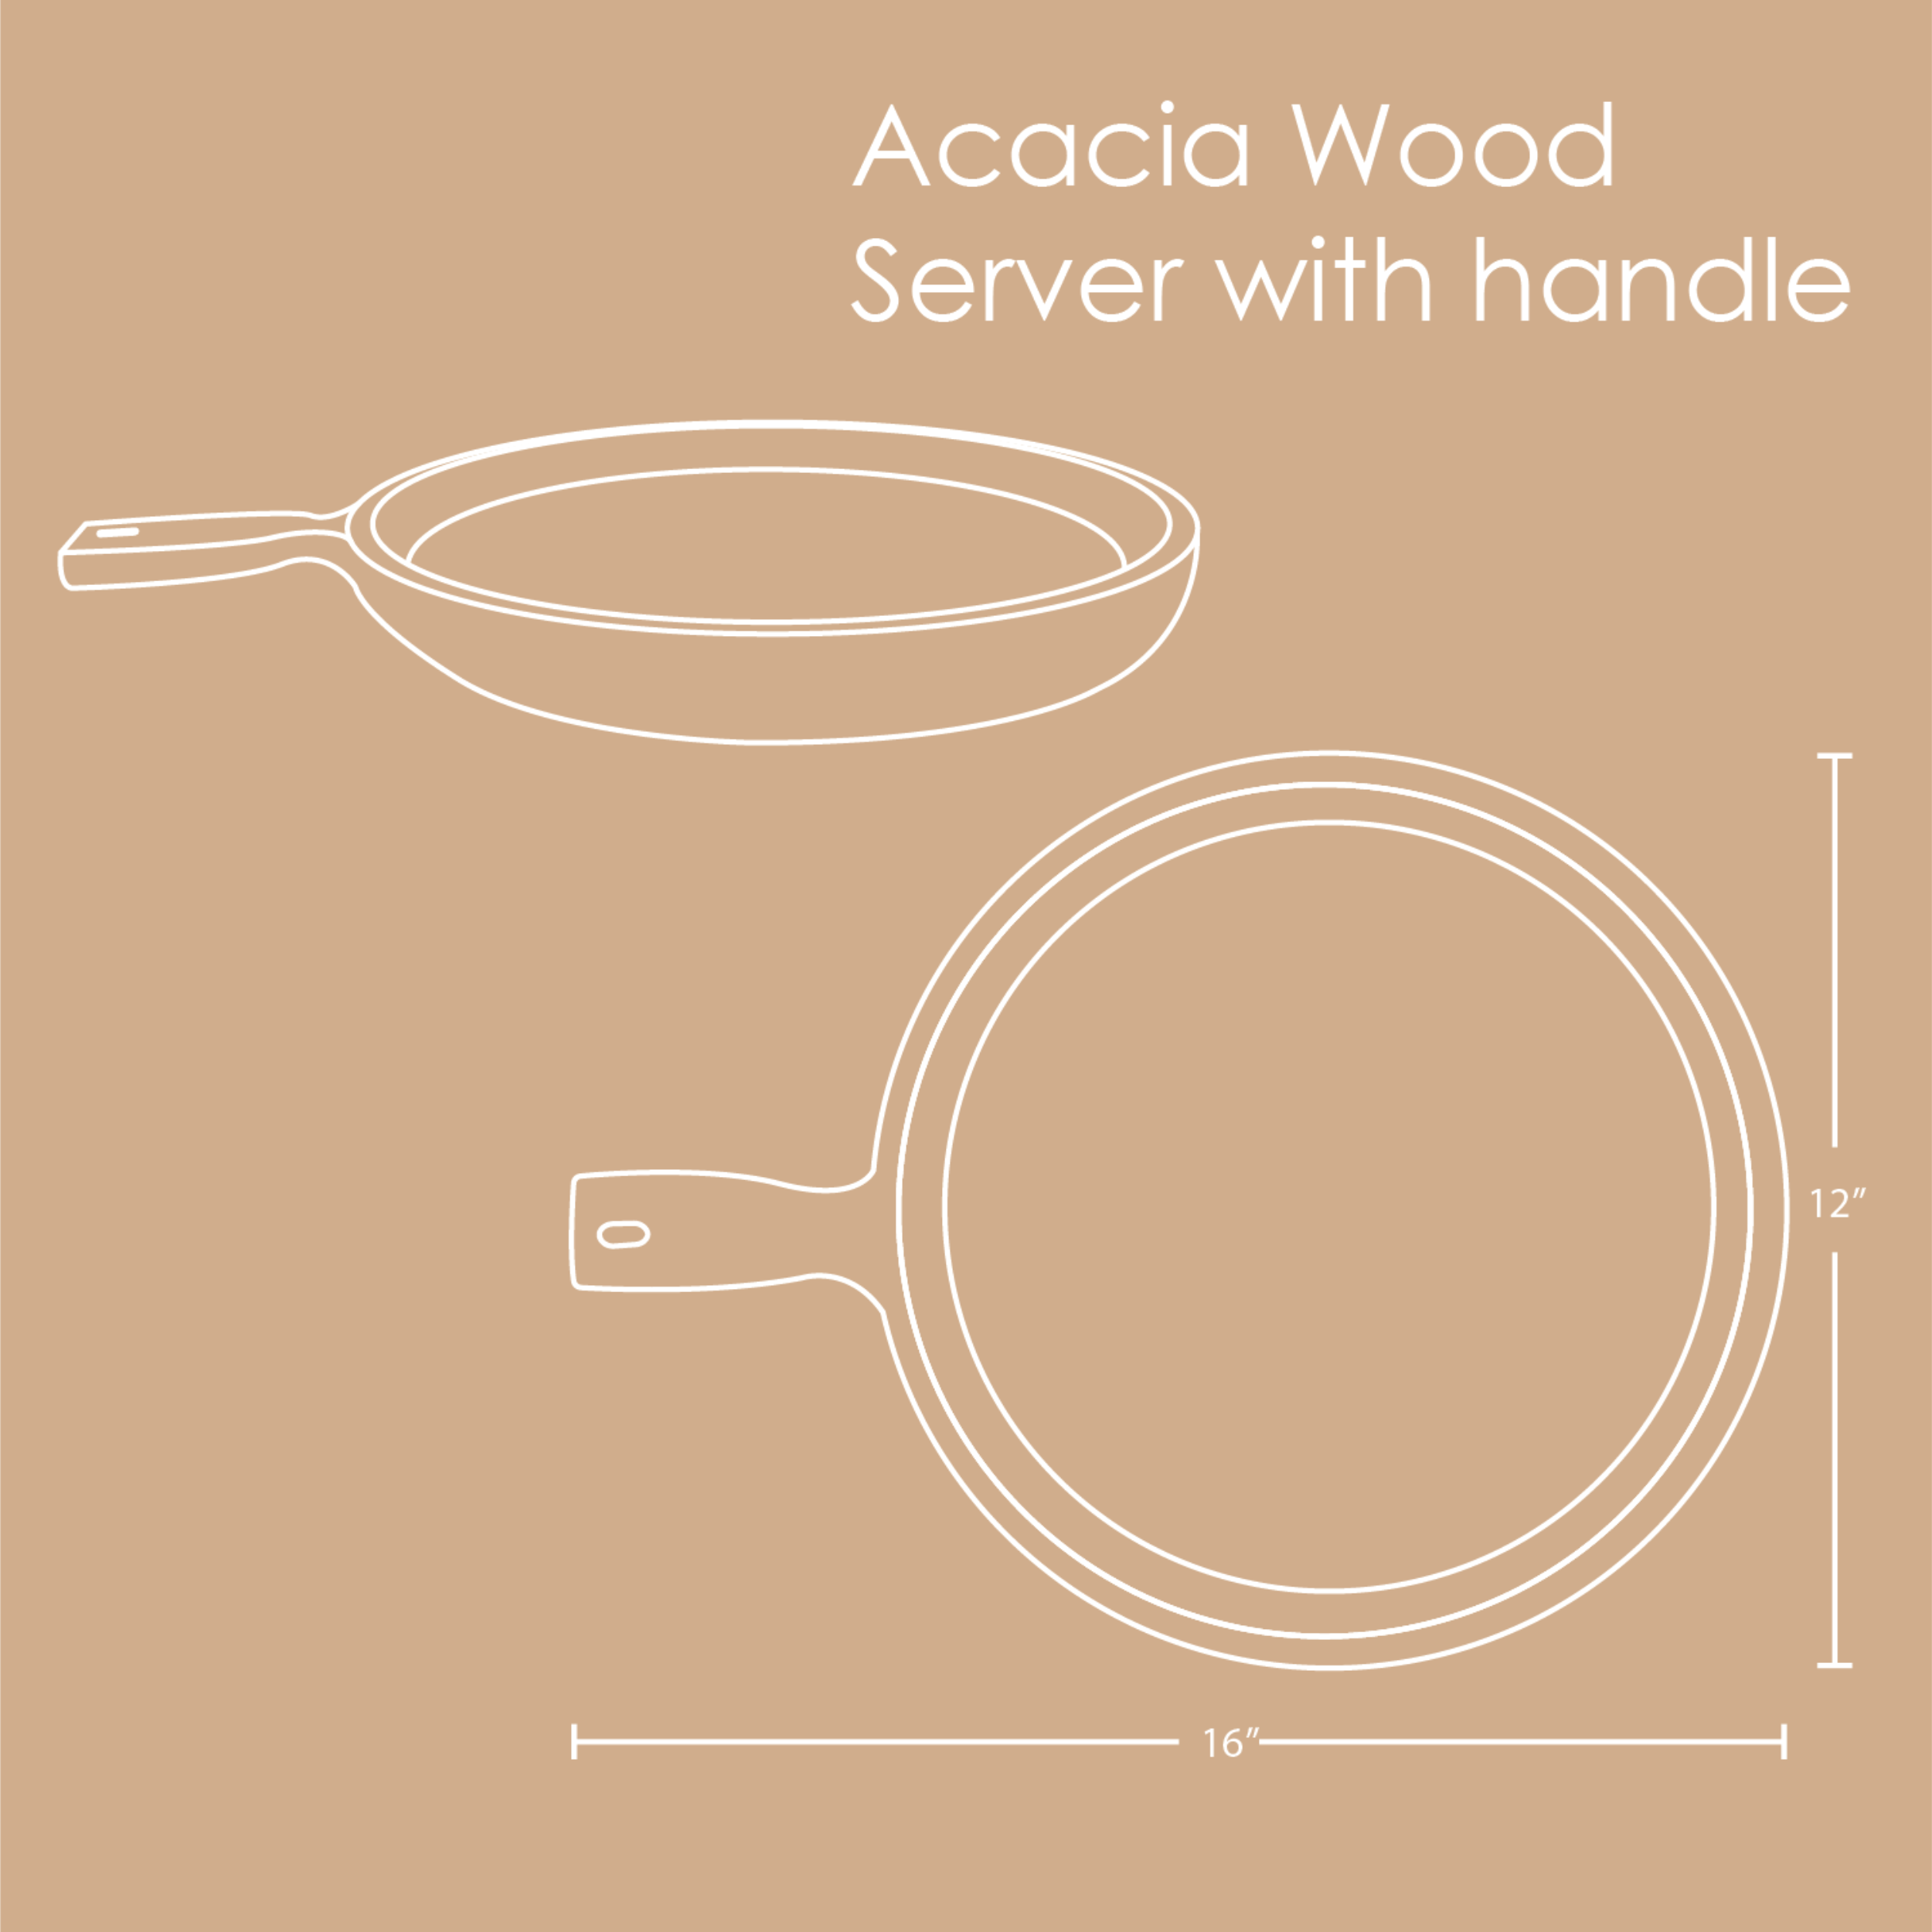 Acacia Wood Server with handle